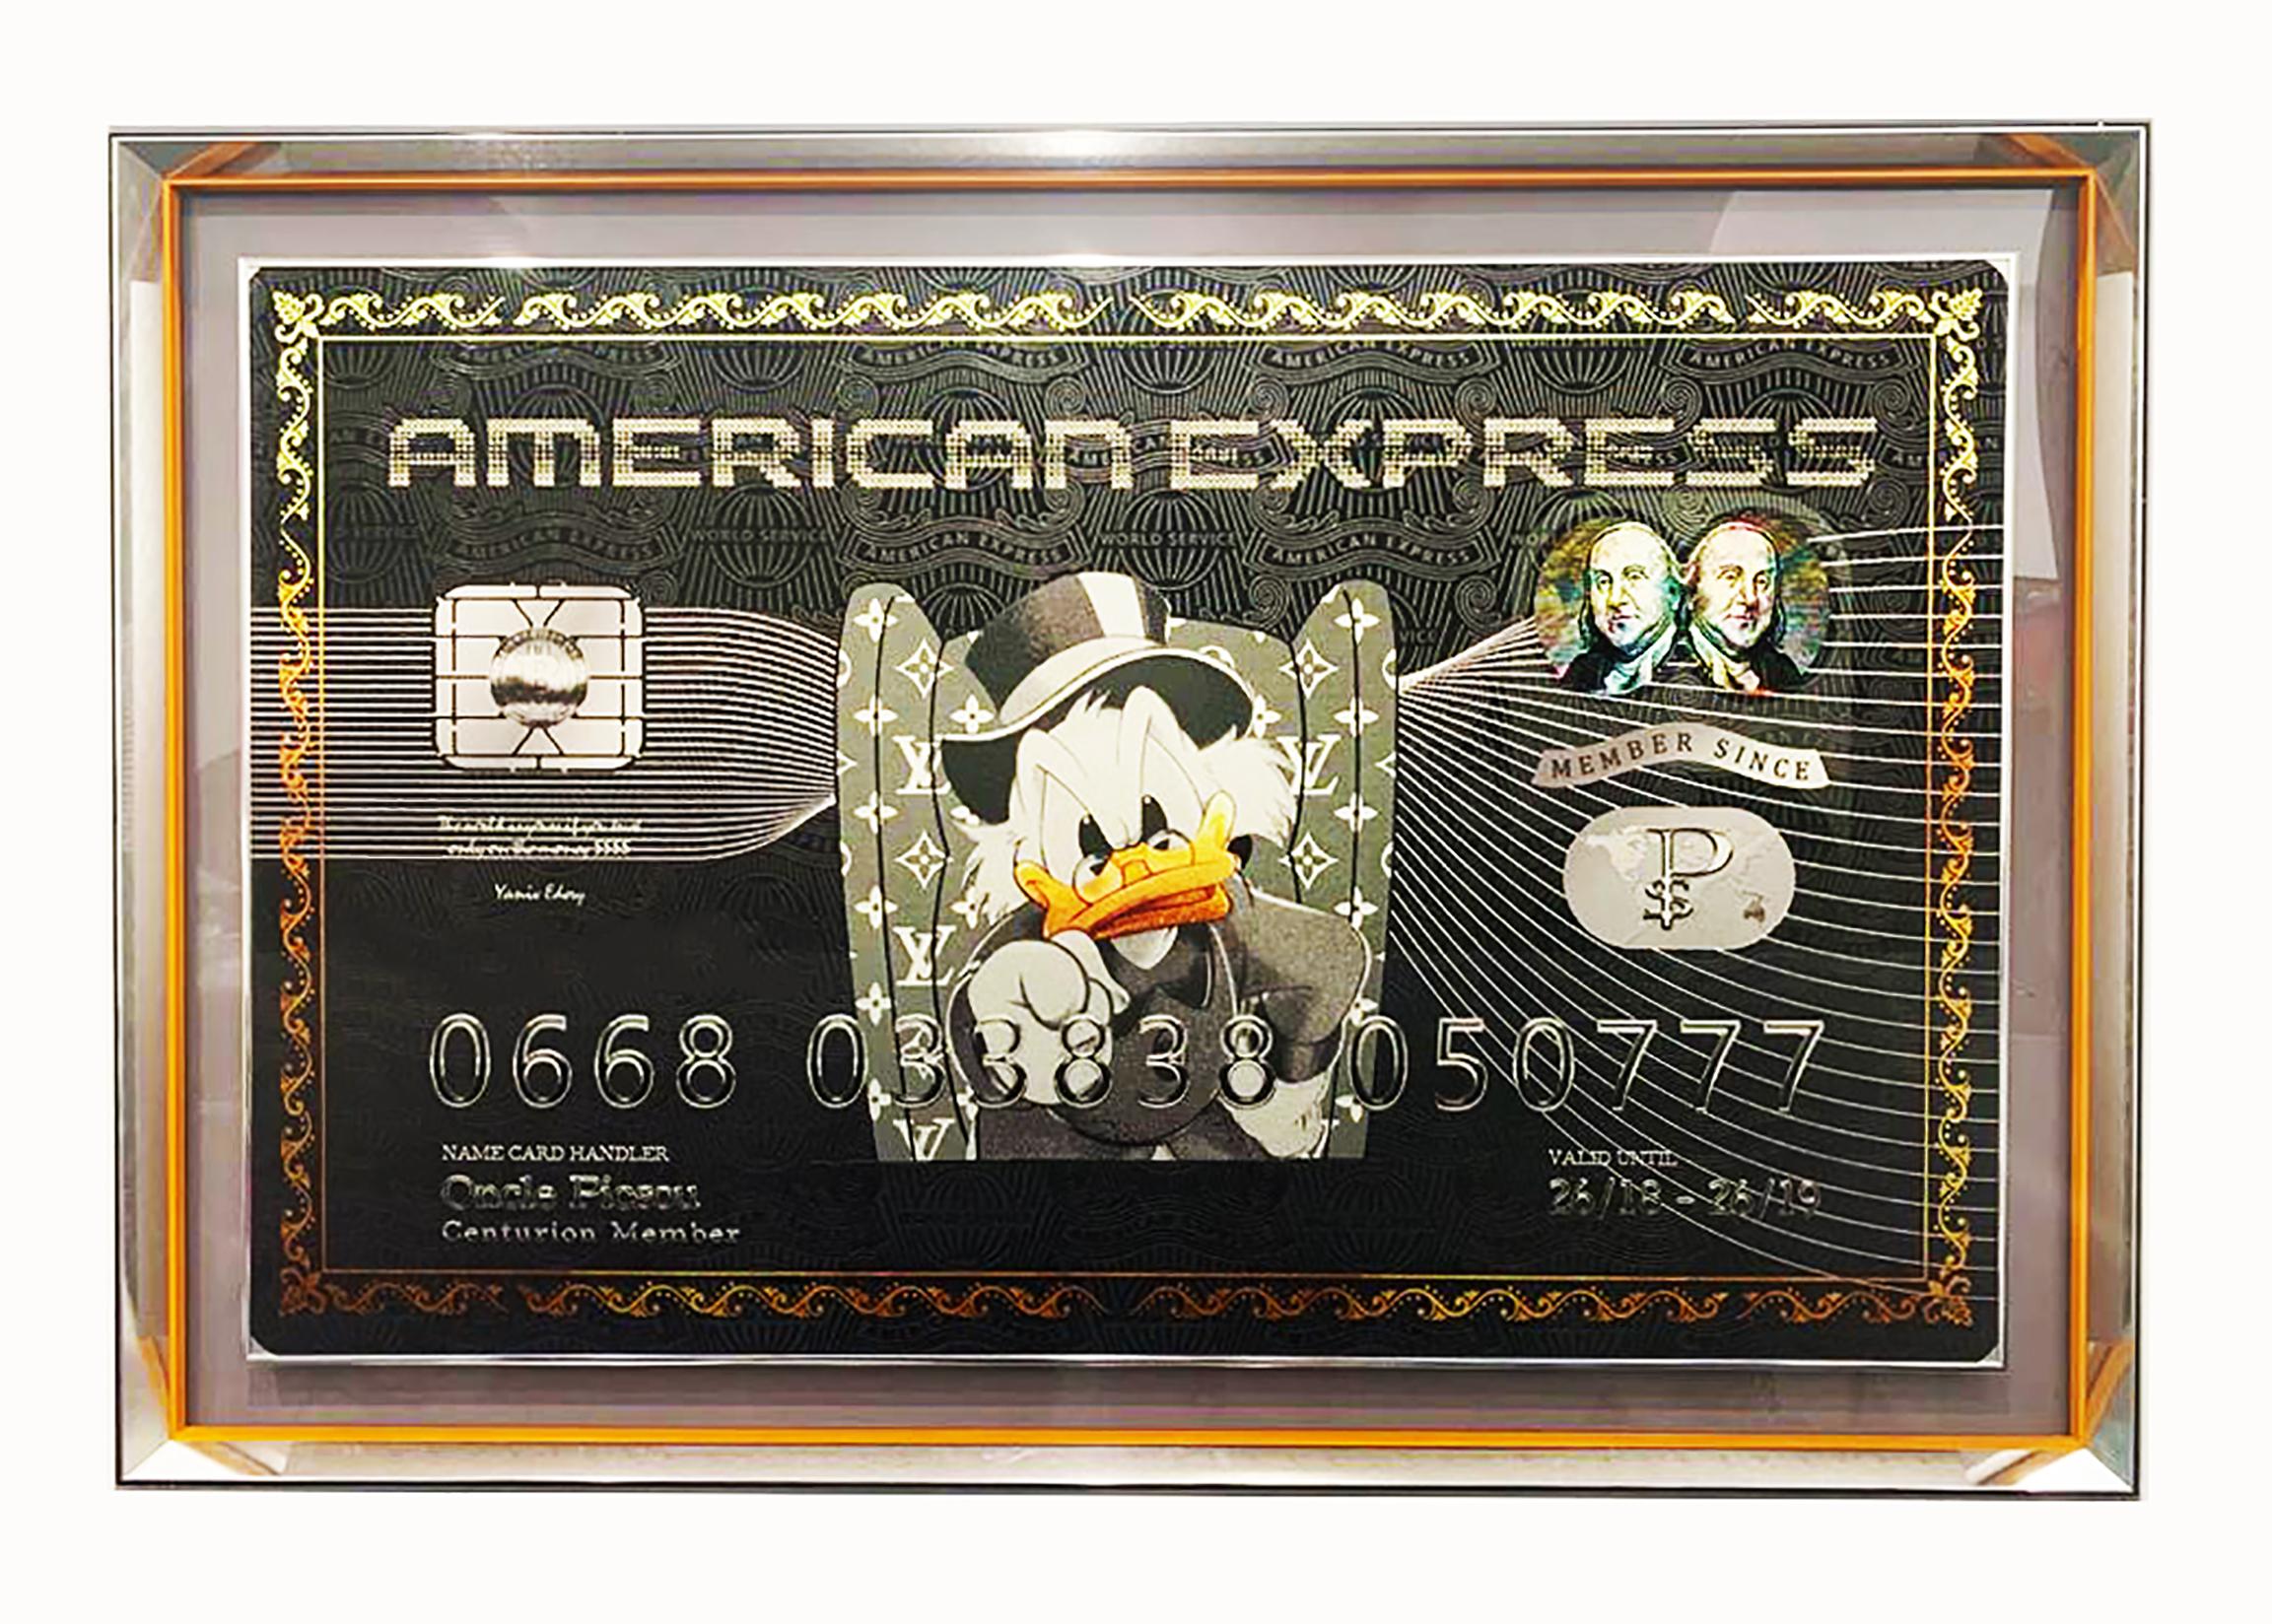 La legendaria "American Express" de Edery, arte pop